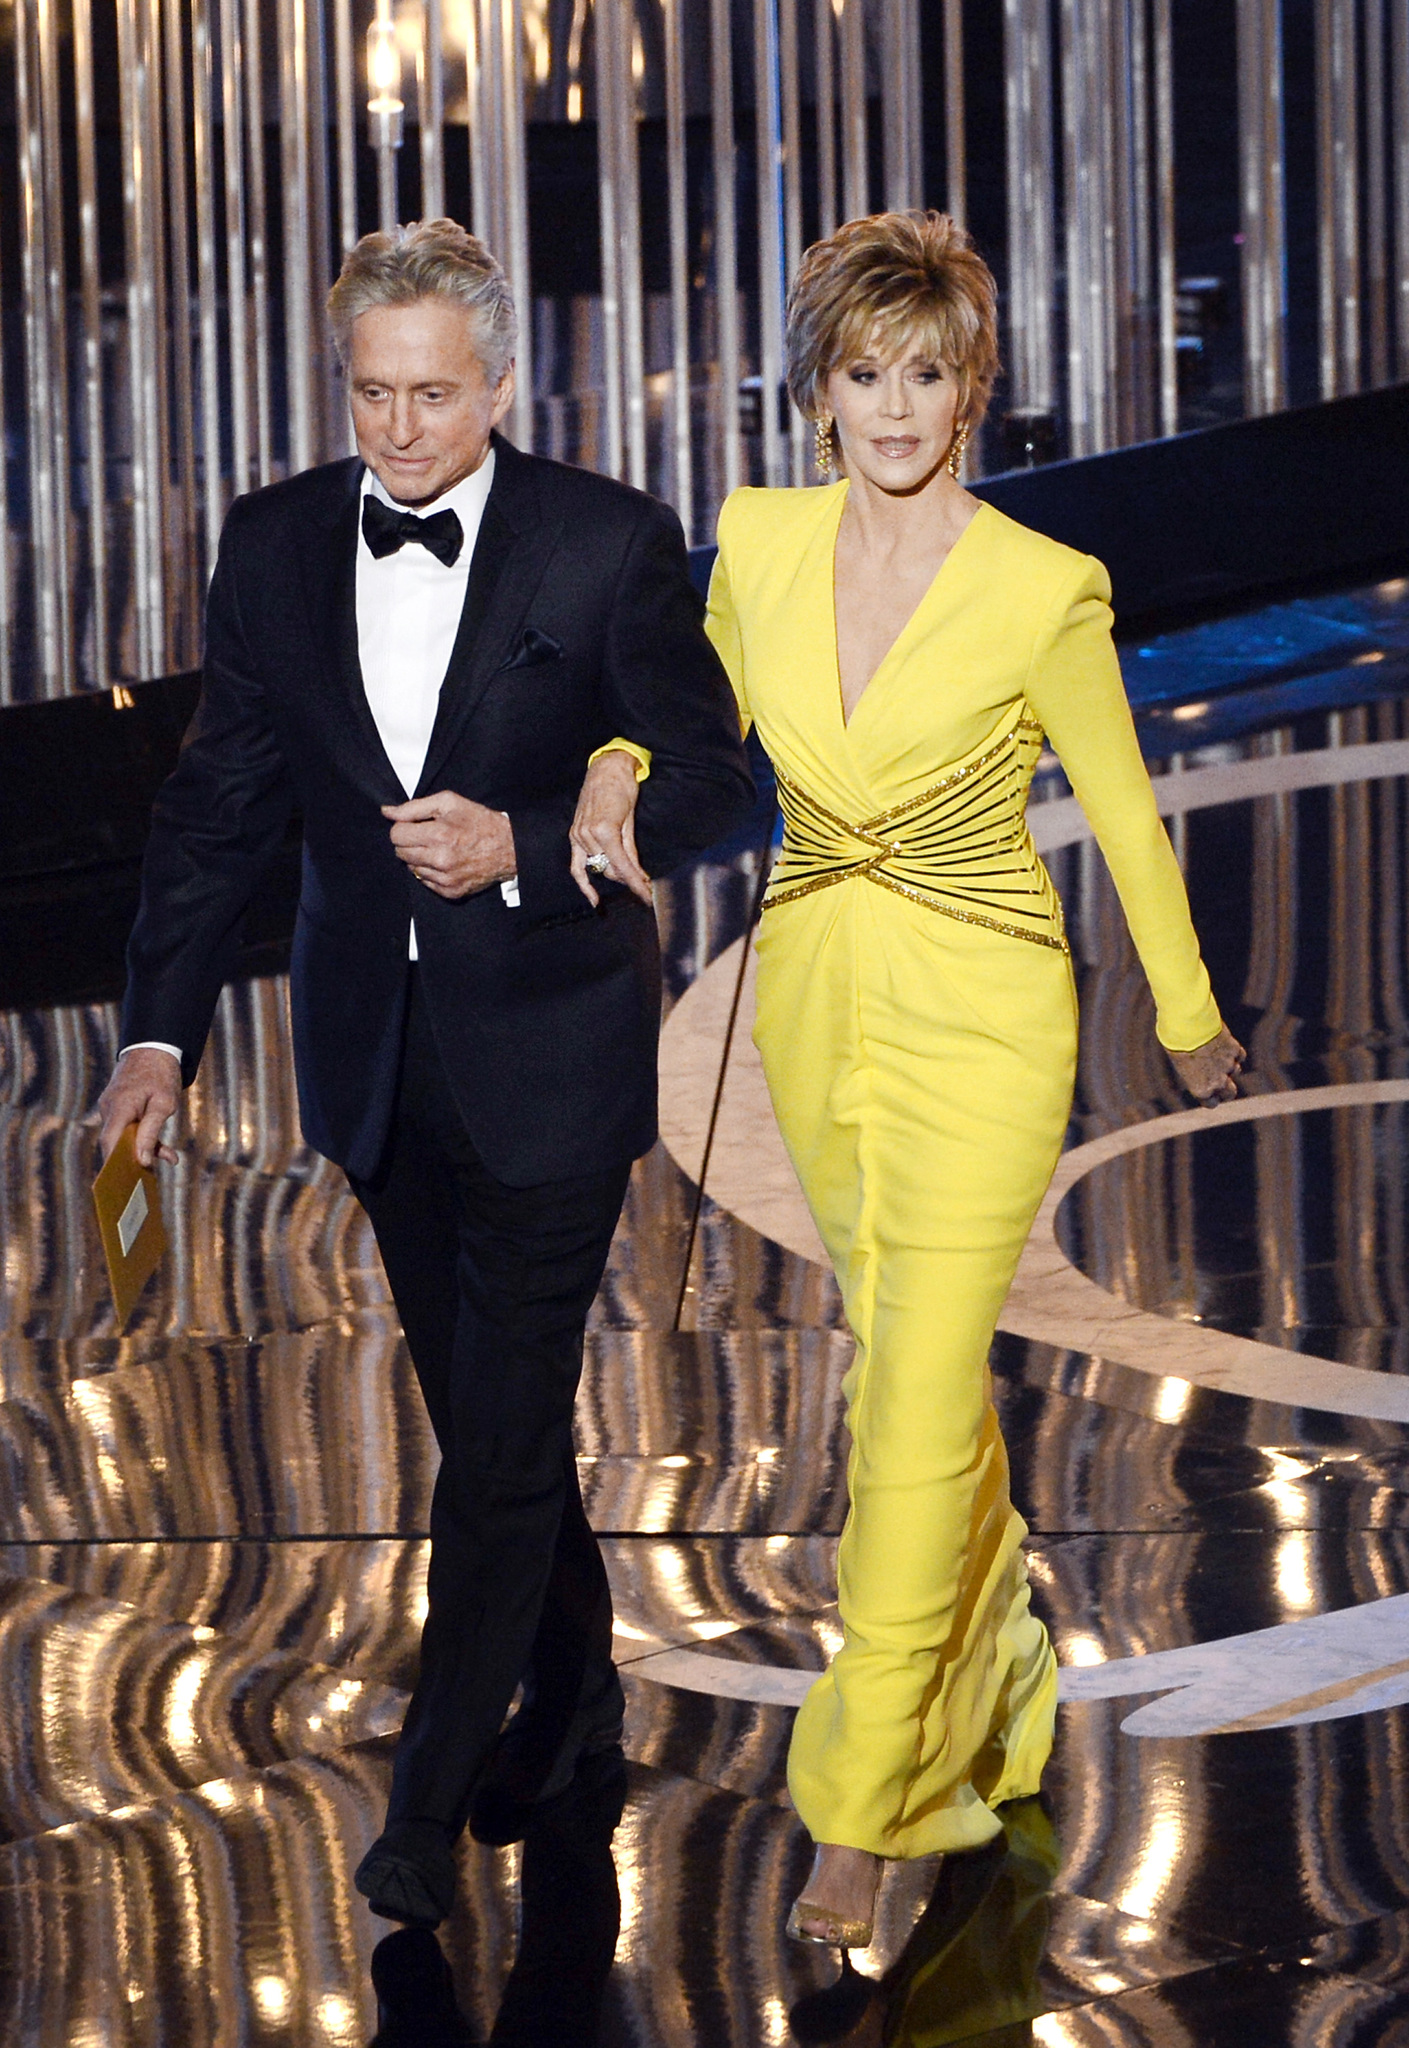 Michael Douglas and Jane Fonda